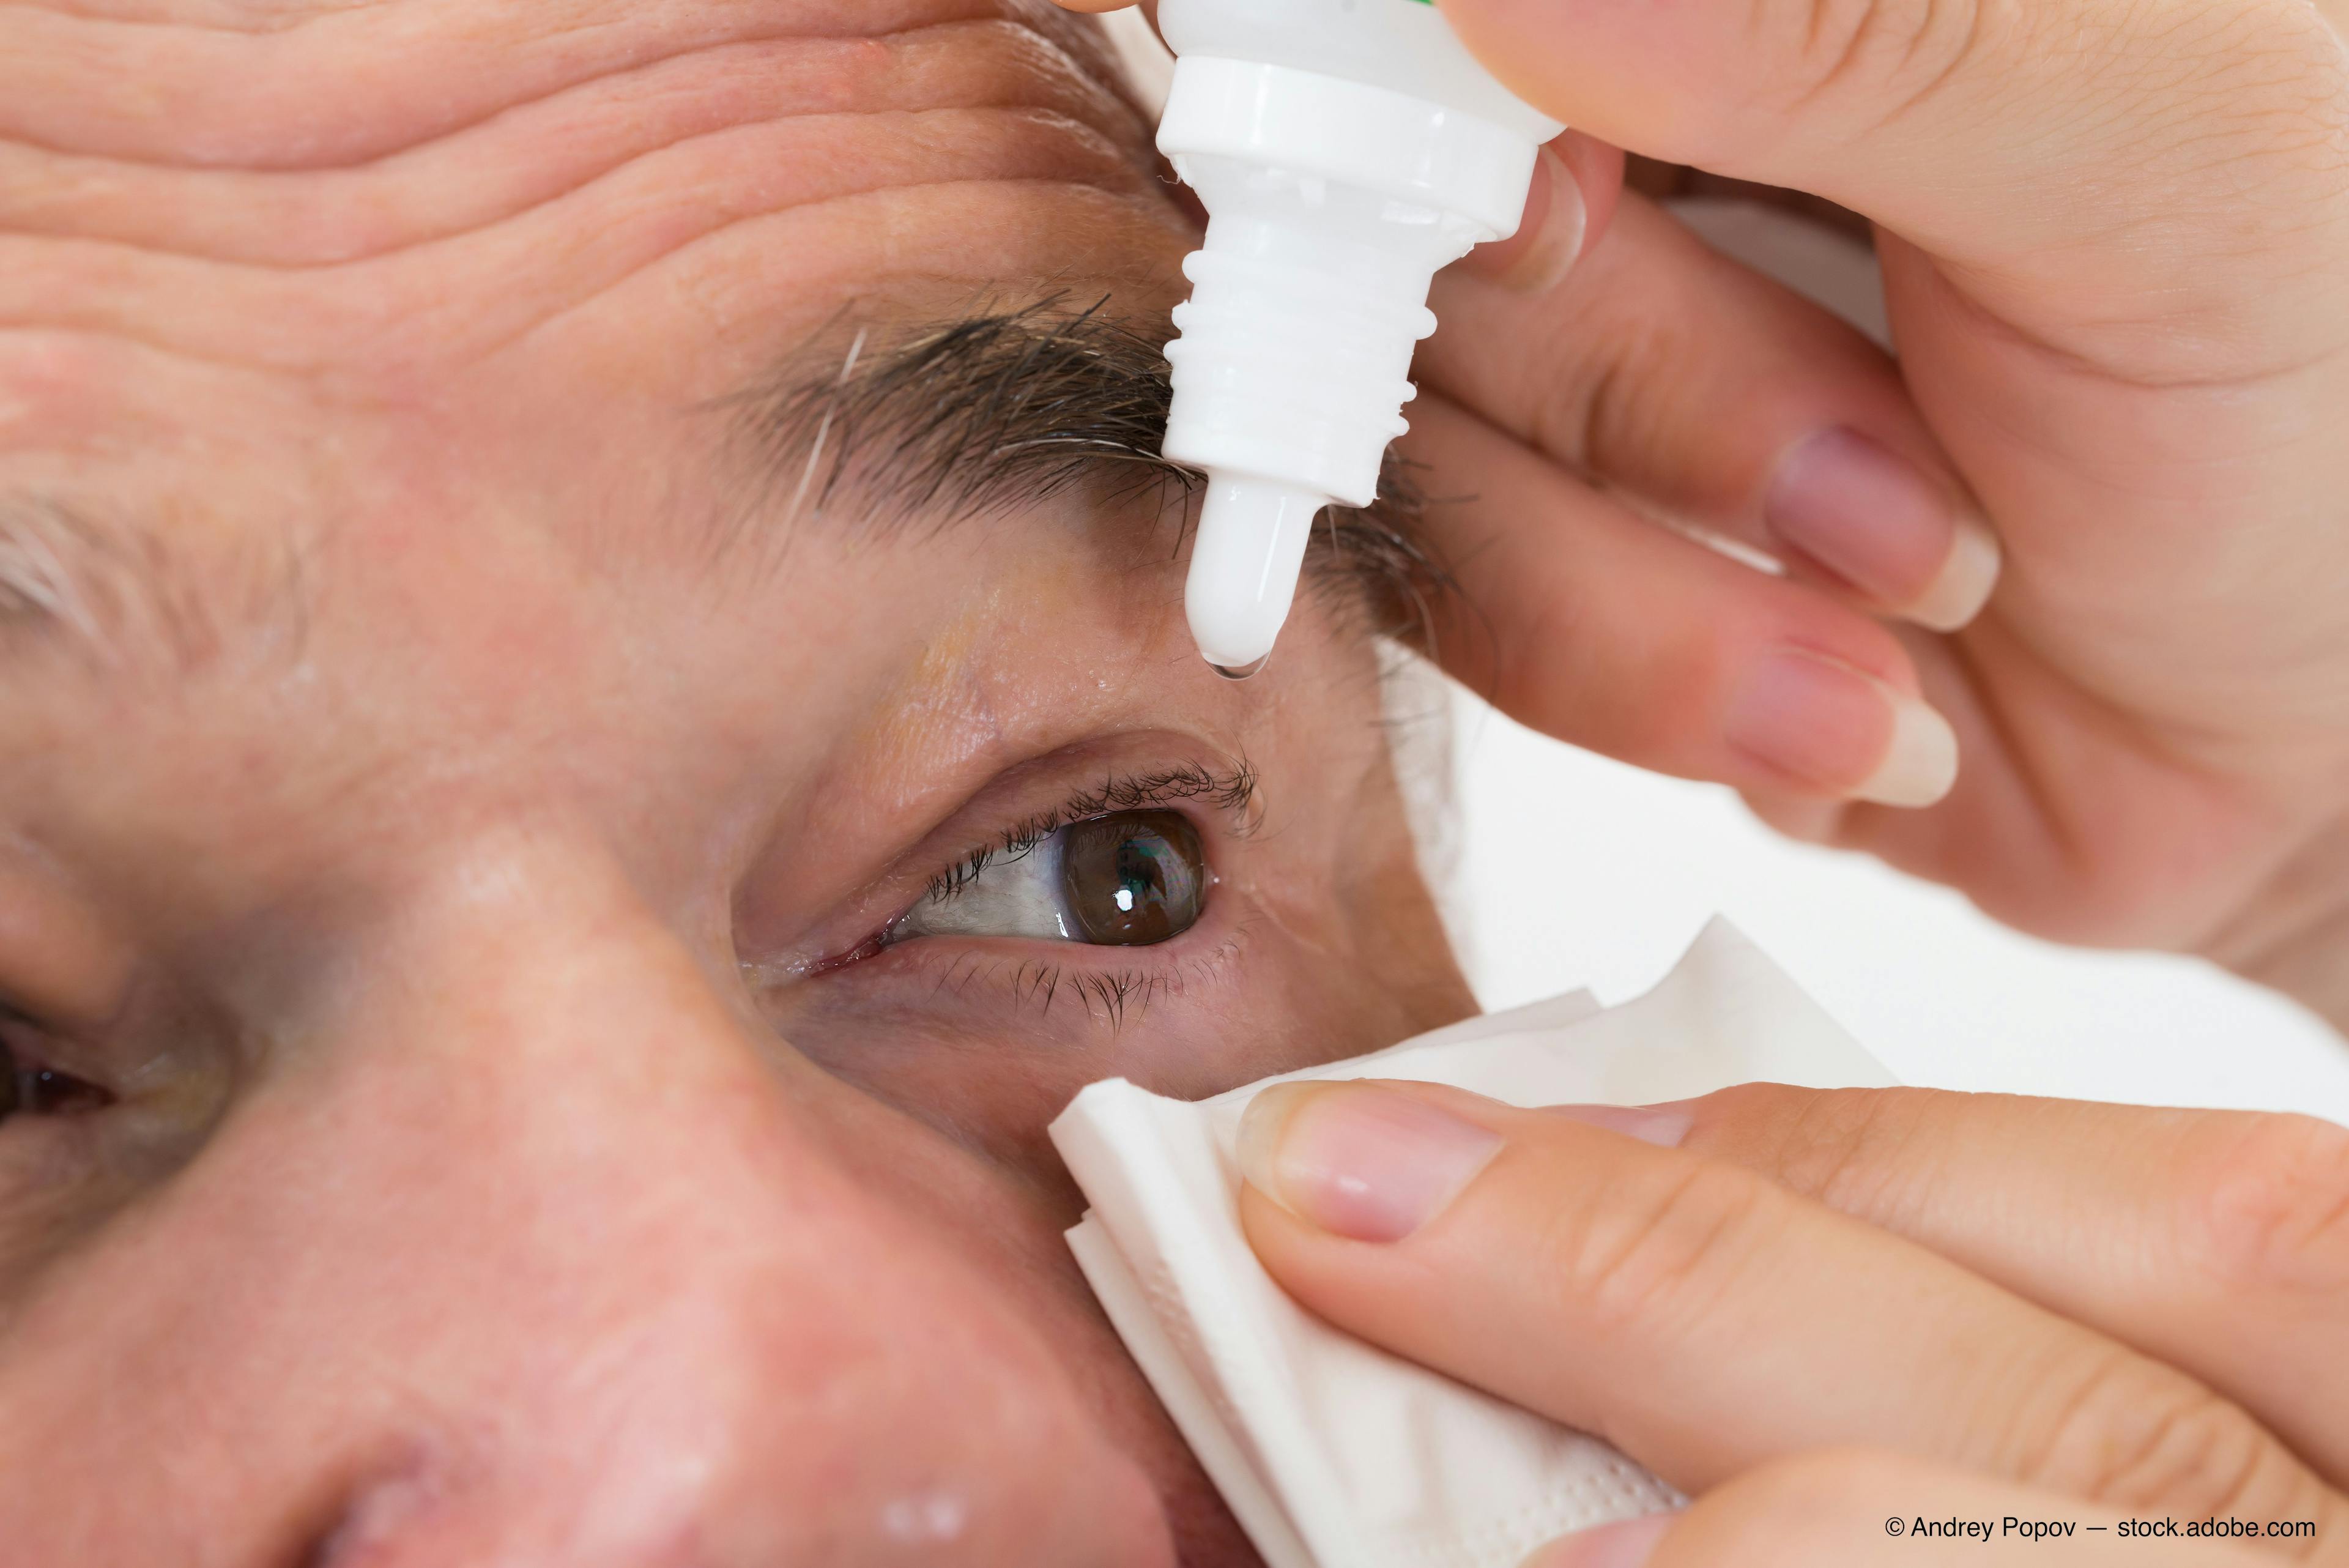 Dry eye severity, treatment varies among ethnic minority patients